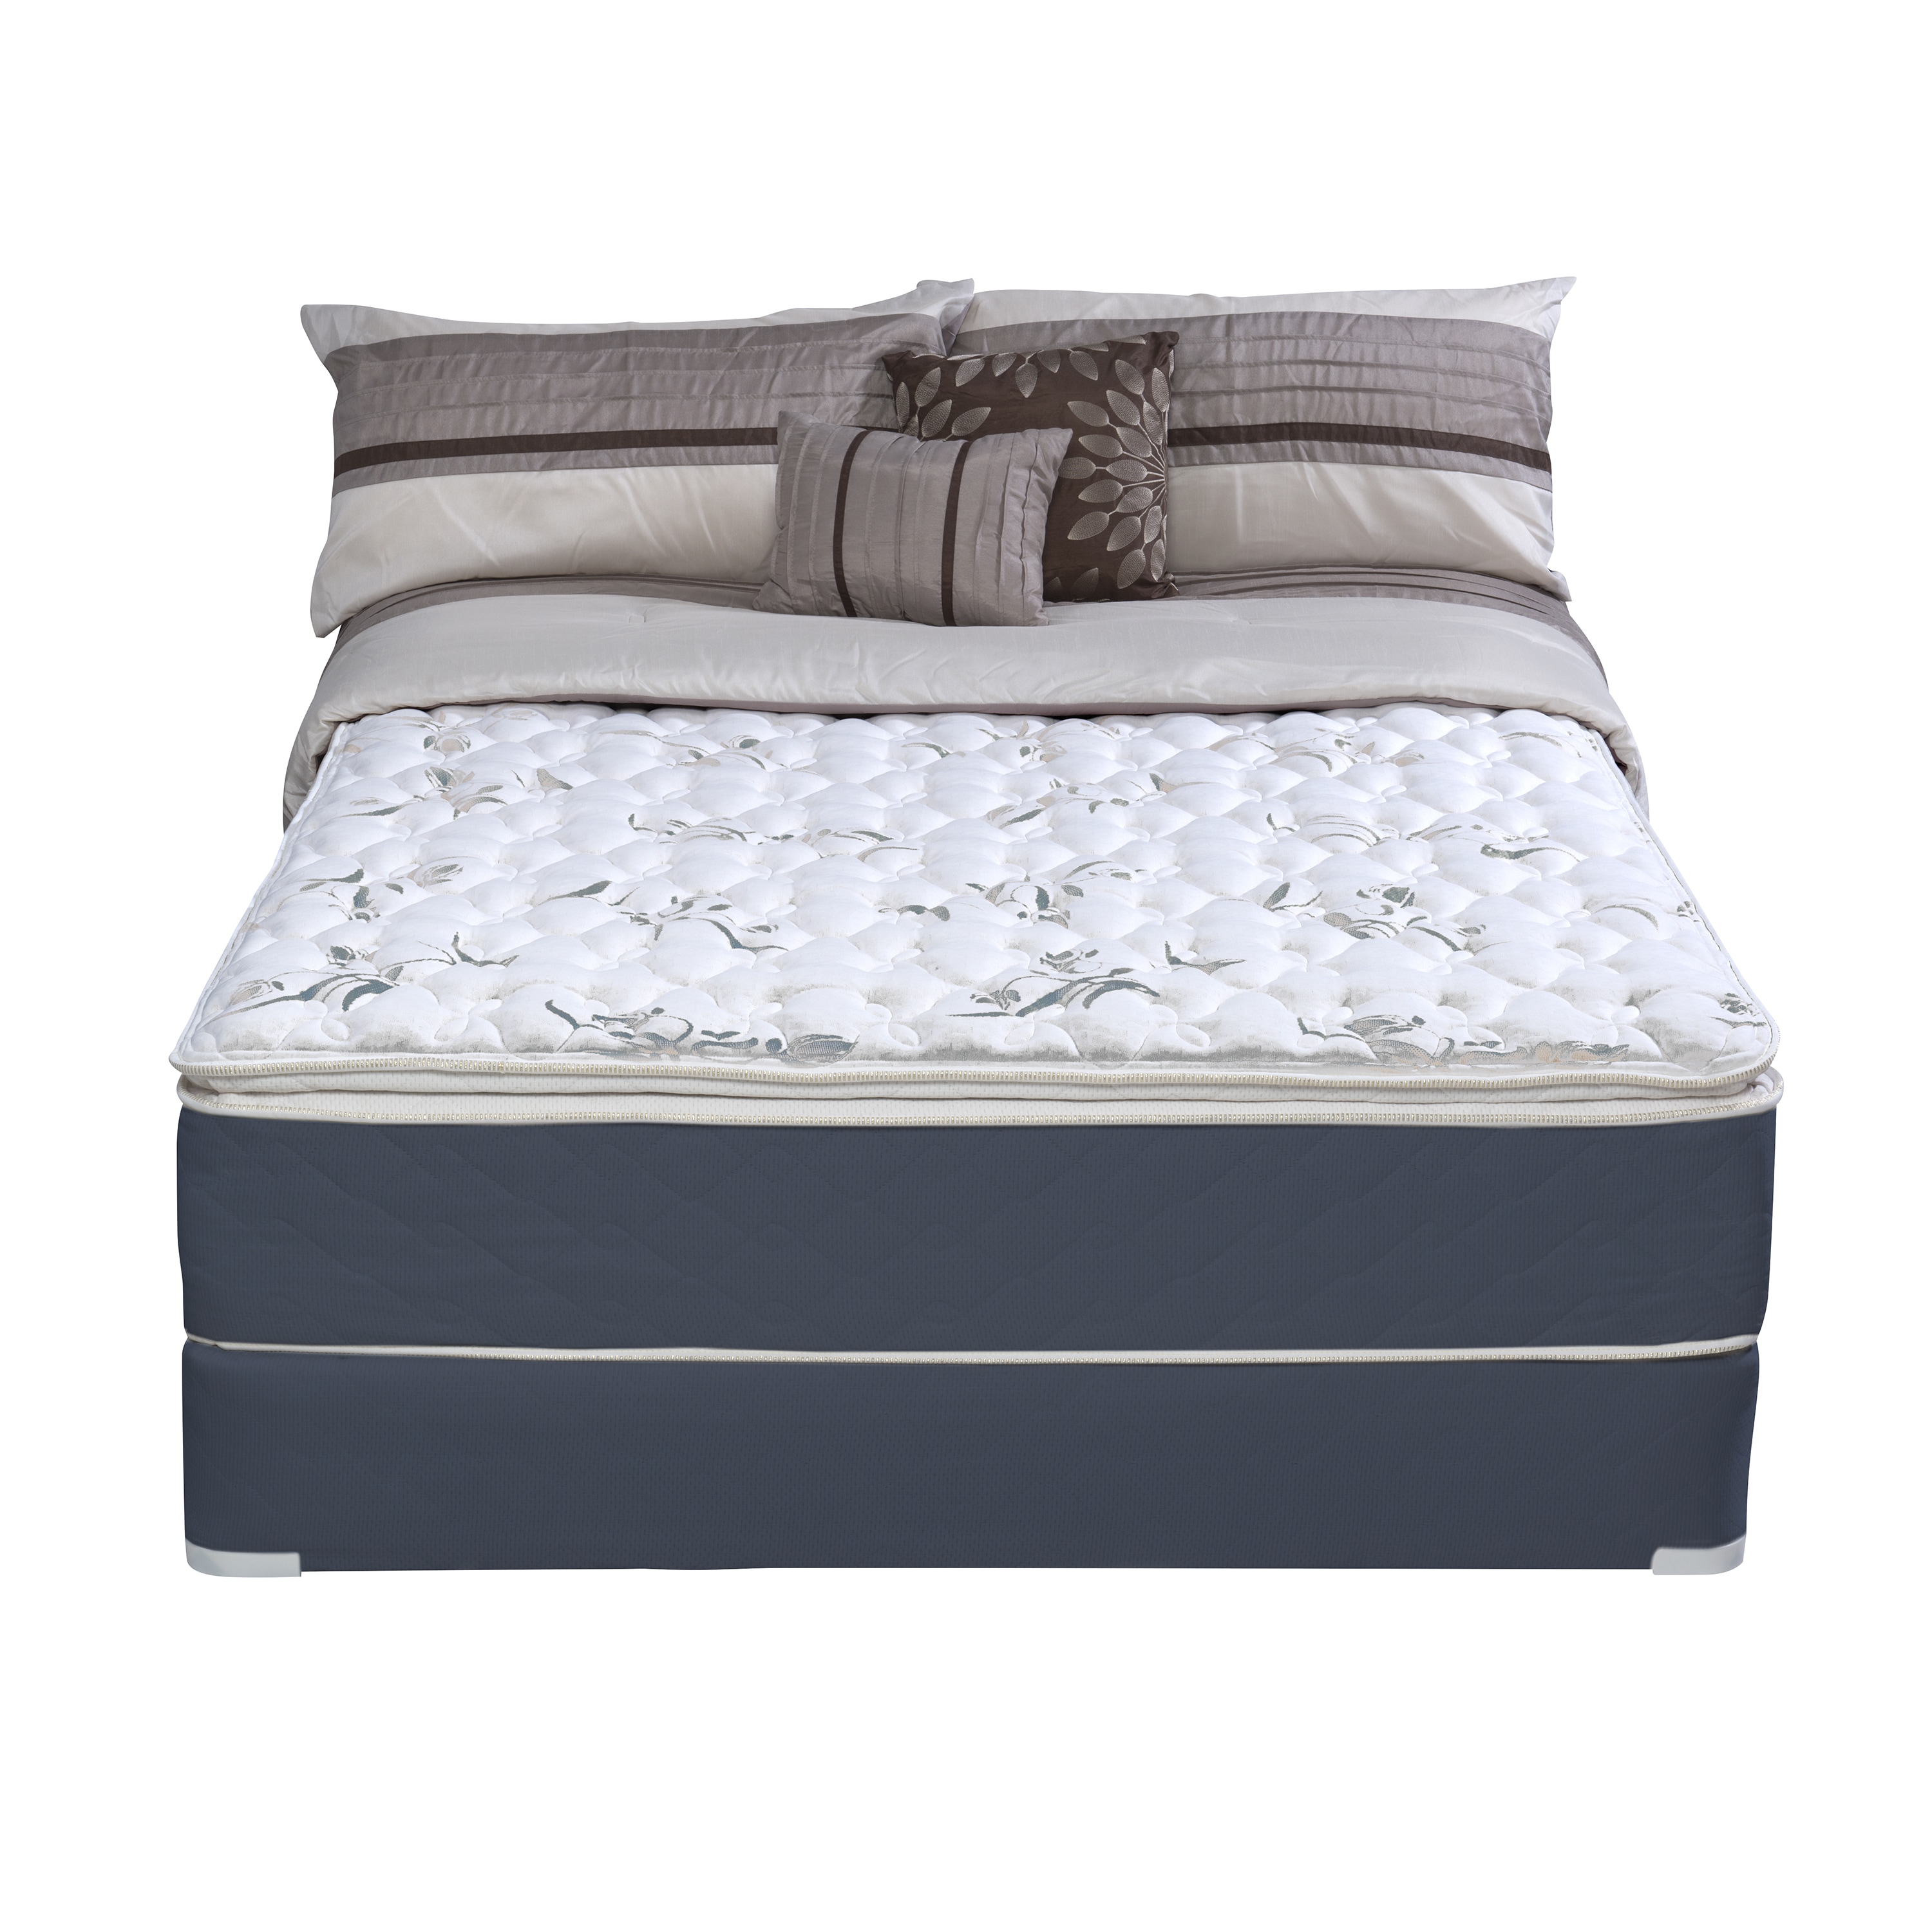 Sleep Accents Illusion Plush Pillowtop Full size Mattress / Foundation Set